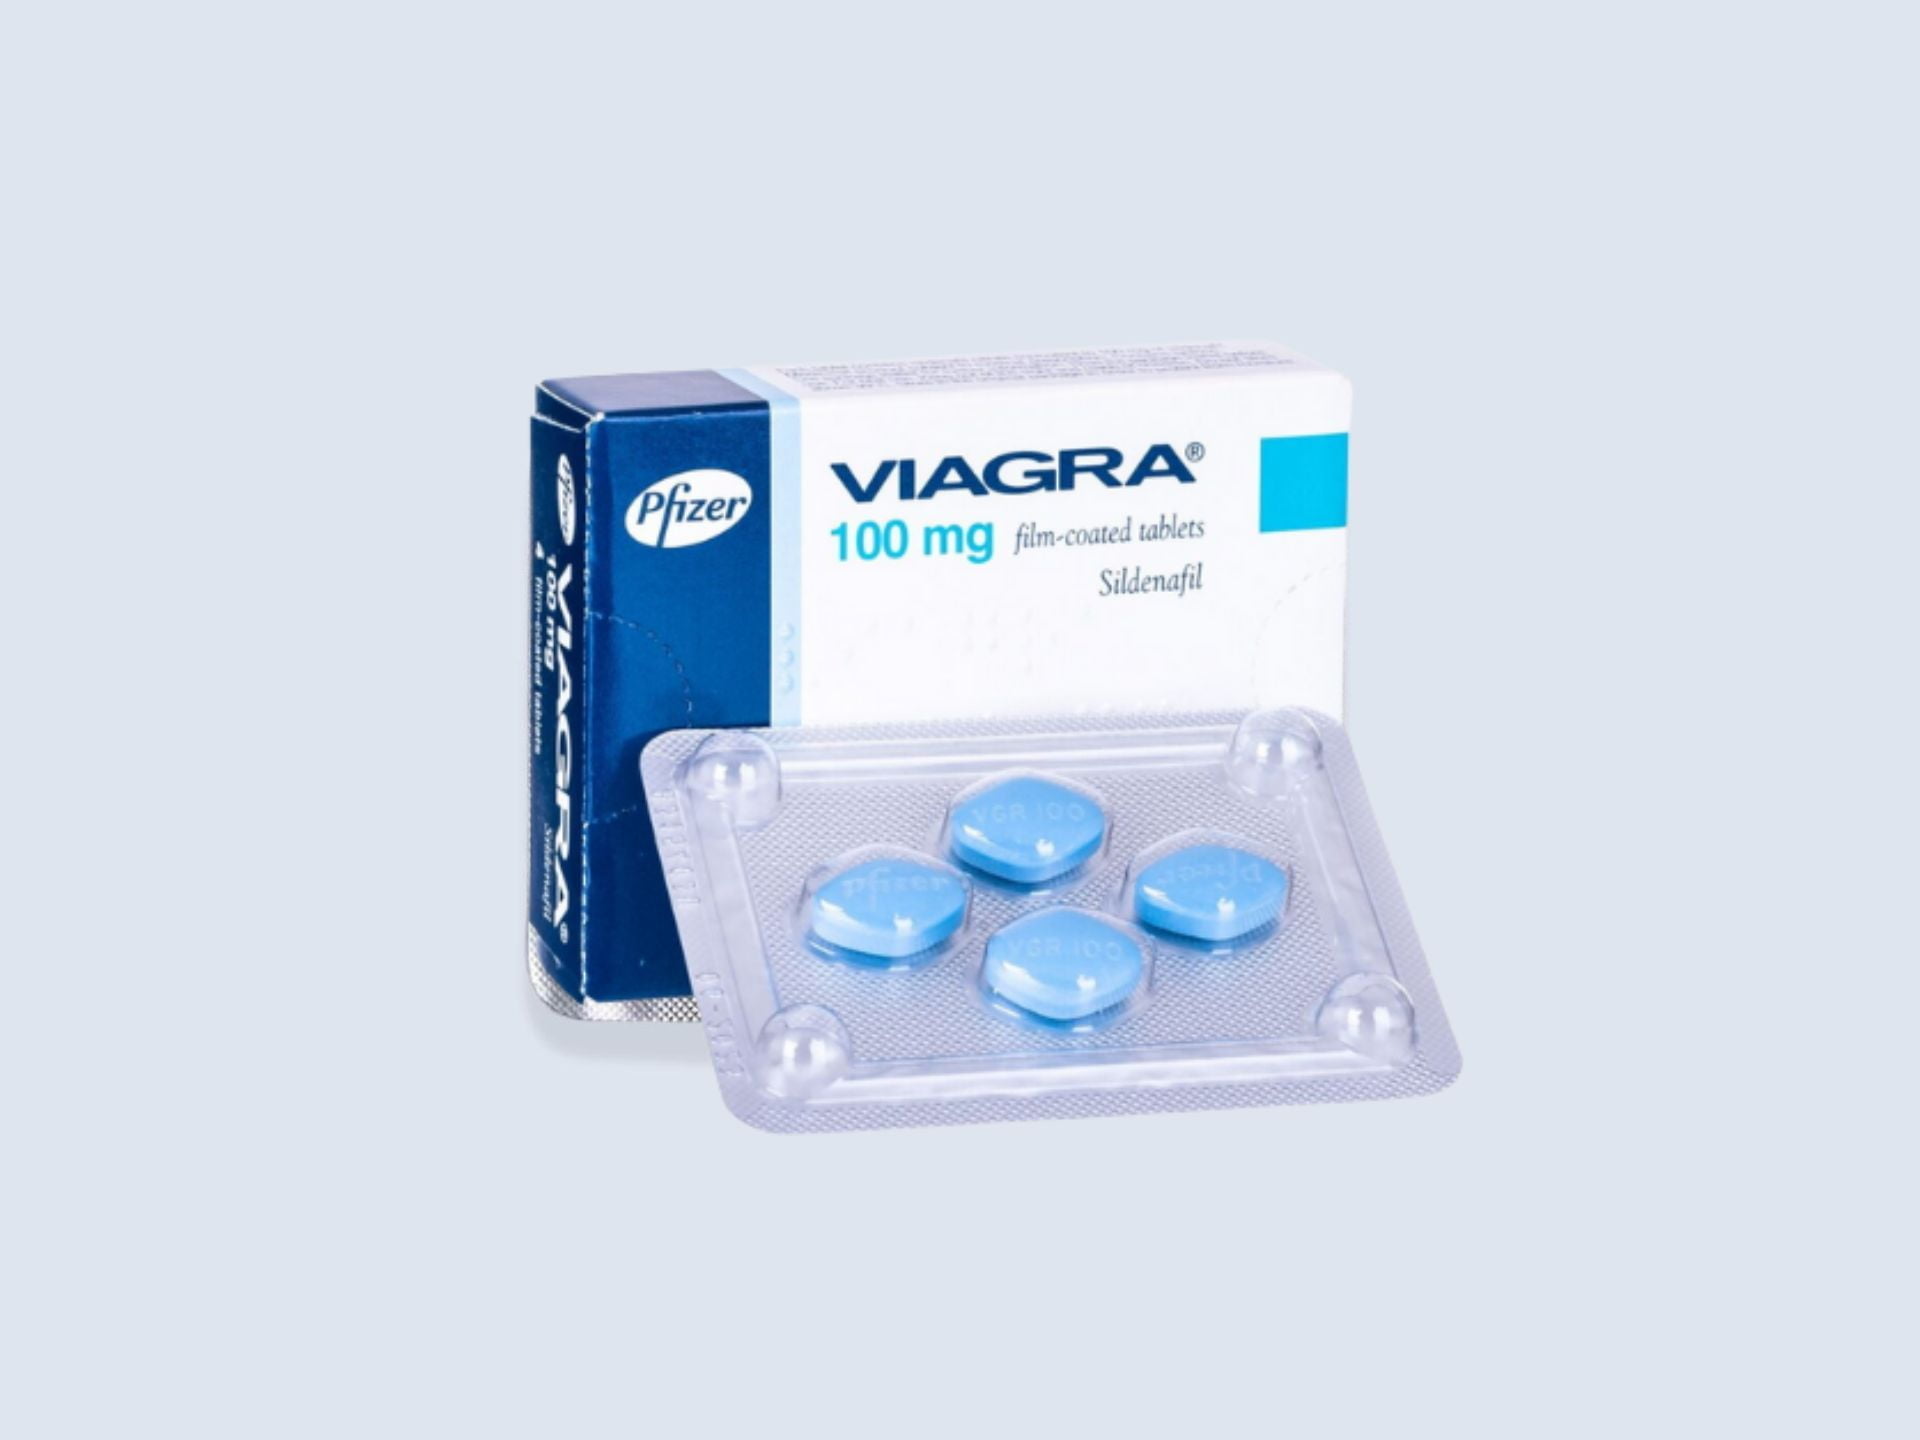 ilovechems pfizer viagra 100 mg te koop - ilovechems